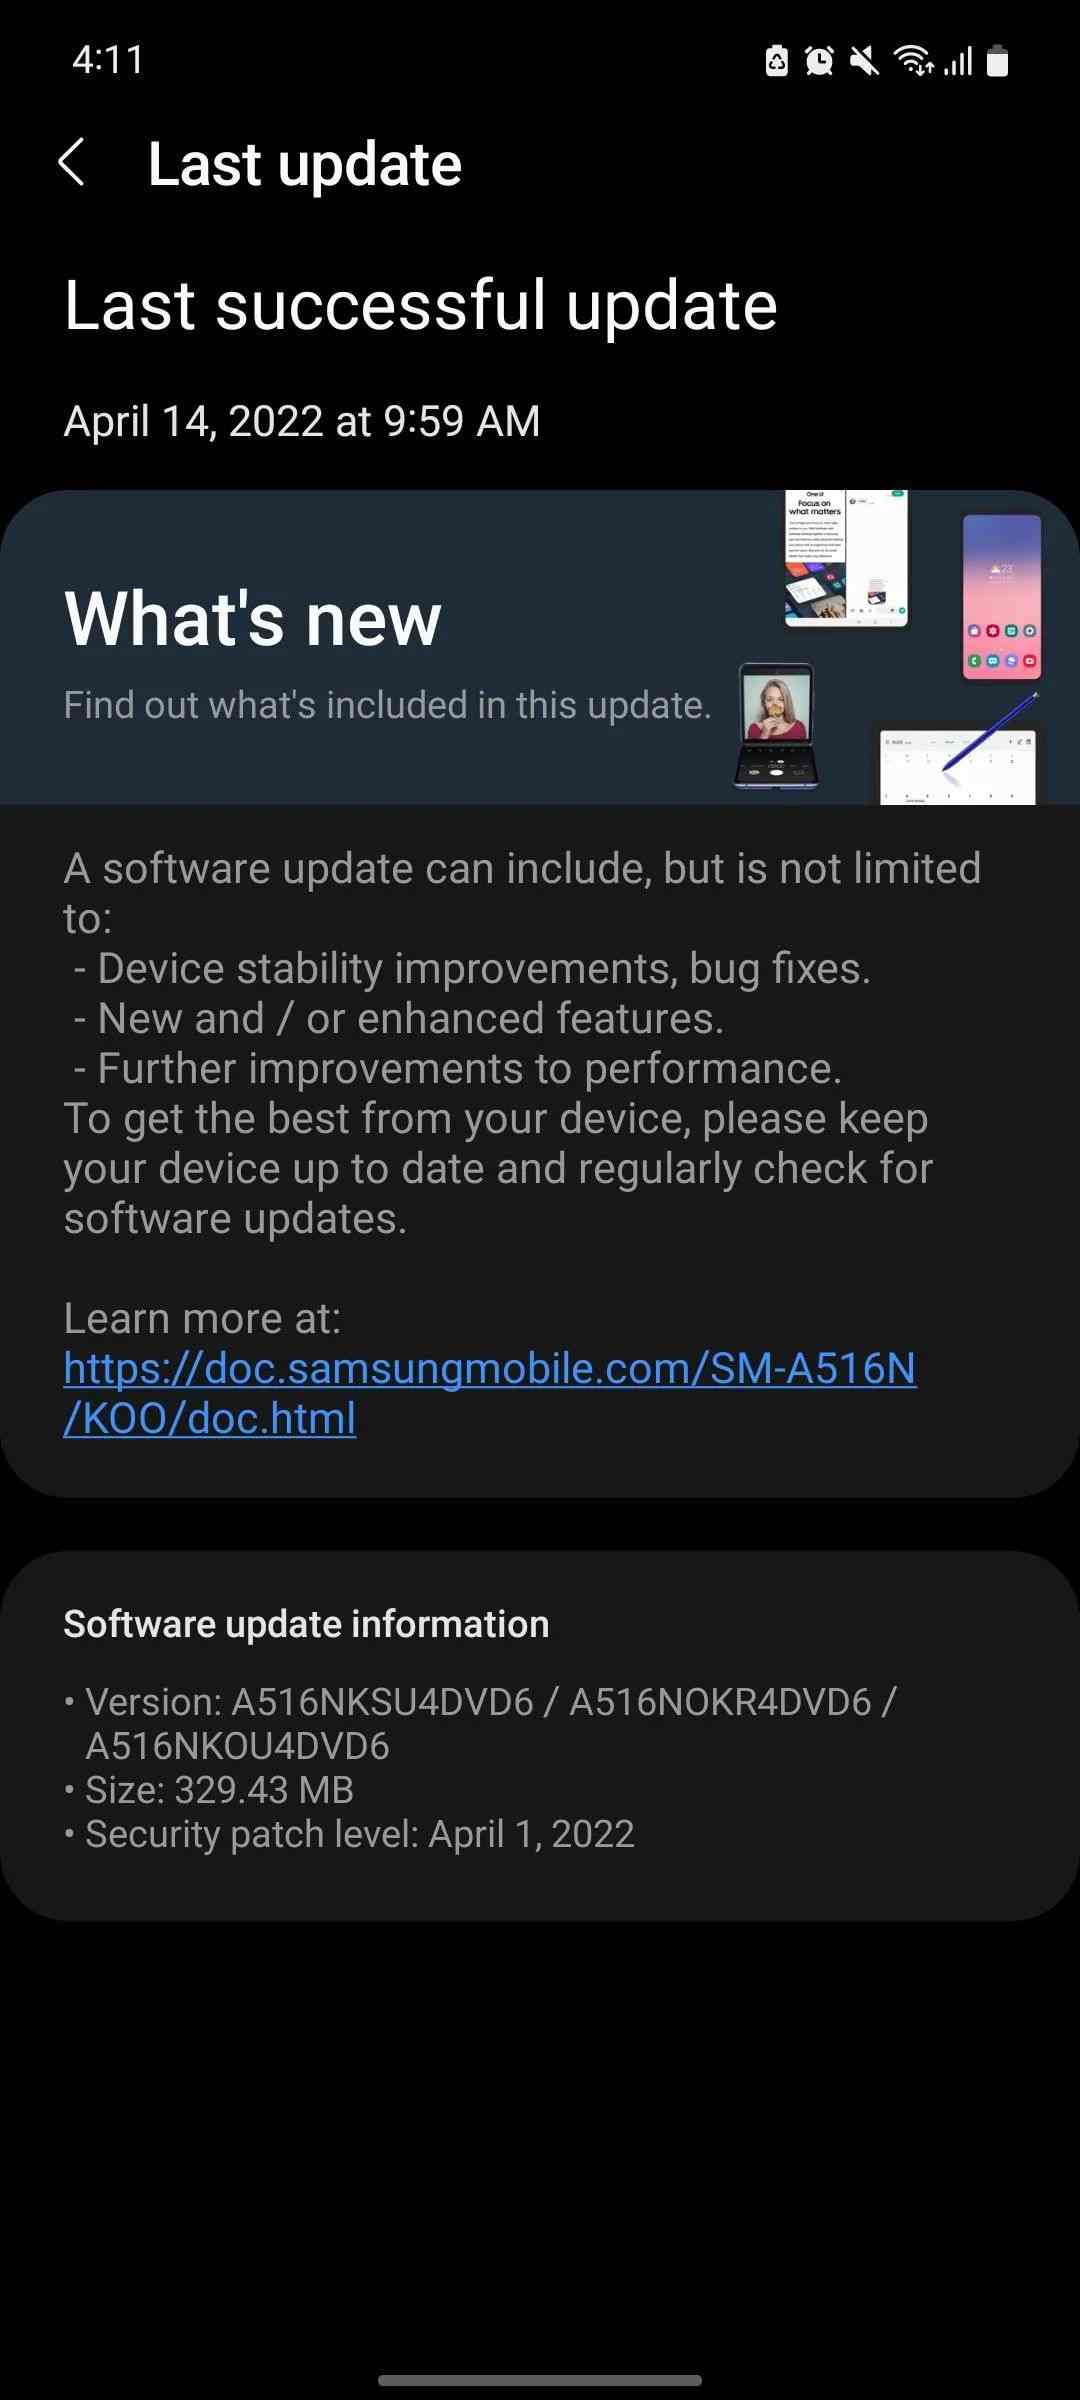 Galaxy A51 5G April 2022 security patch update